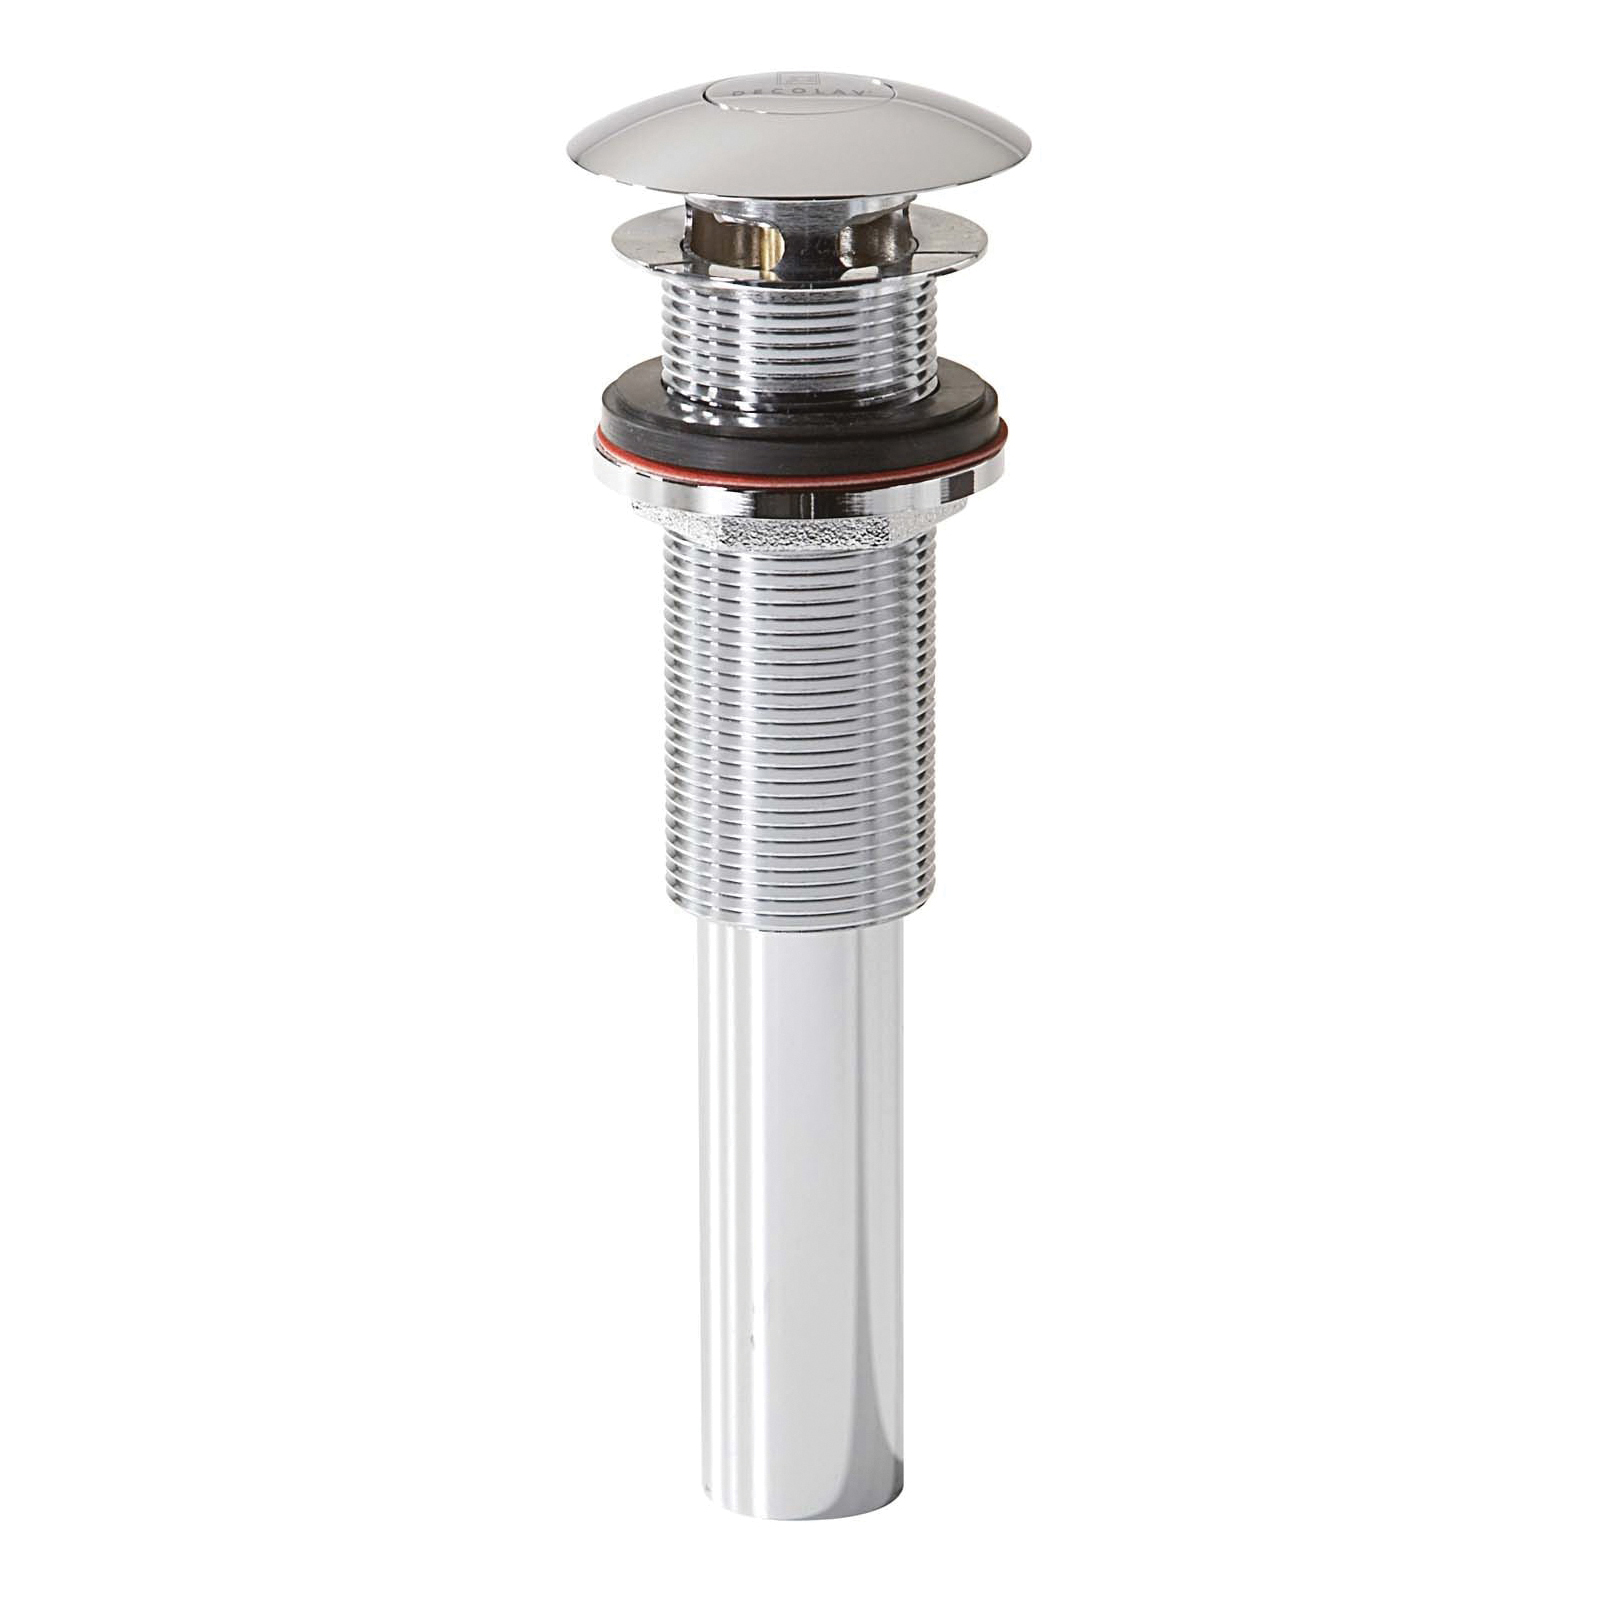 DECOLAV® 9298-CP Decorative Umbrella Top Drain, Polished Chrome, Solid Brass Drain, Includes Lift Rod: No